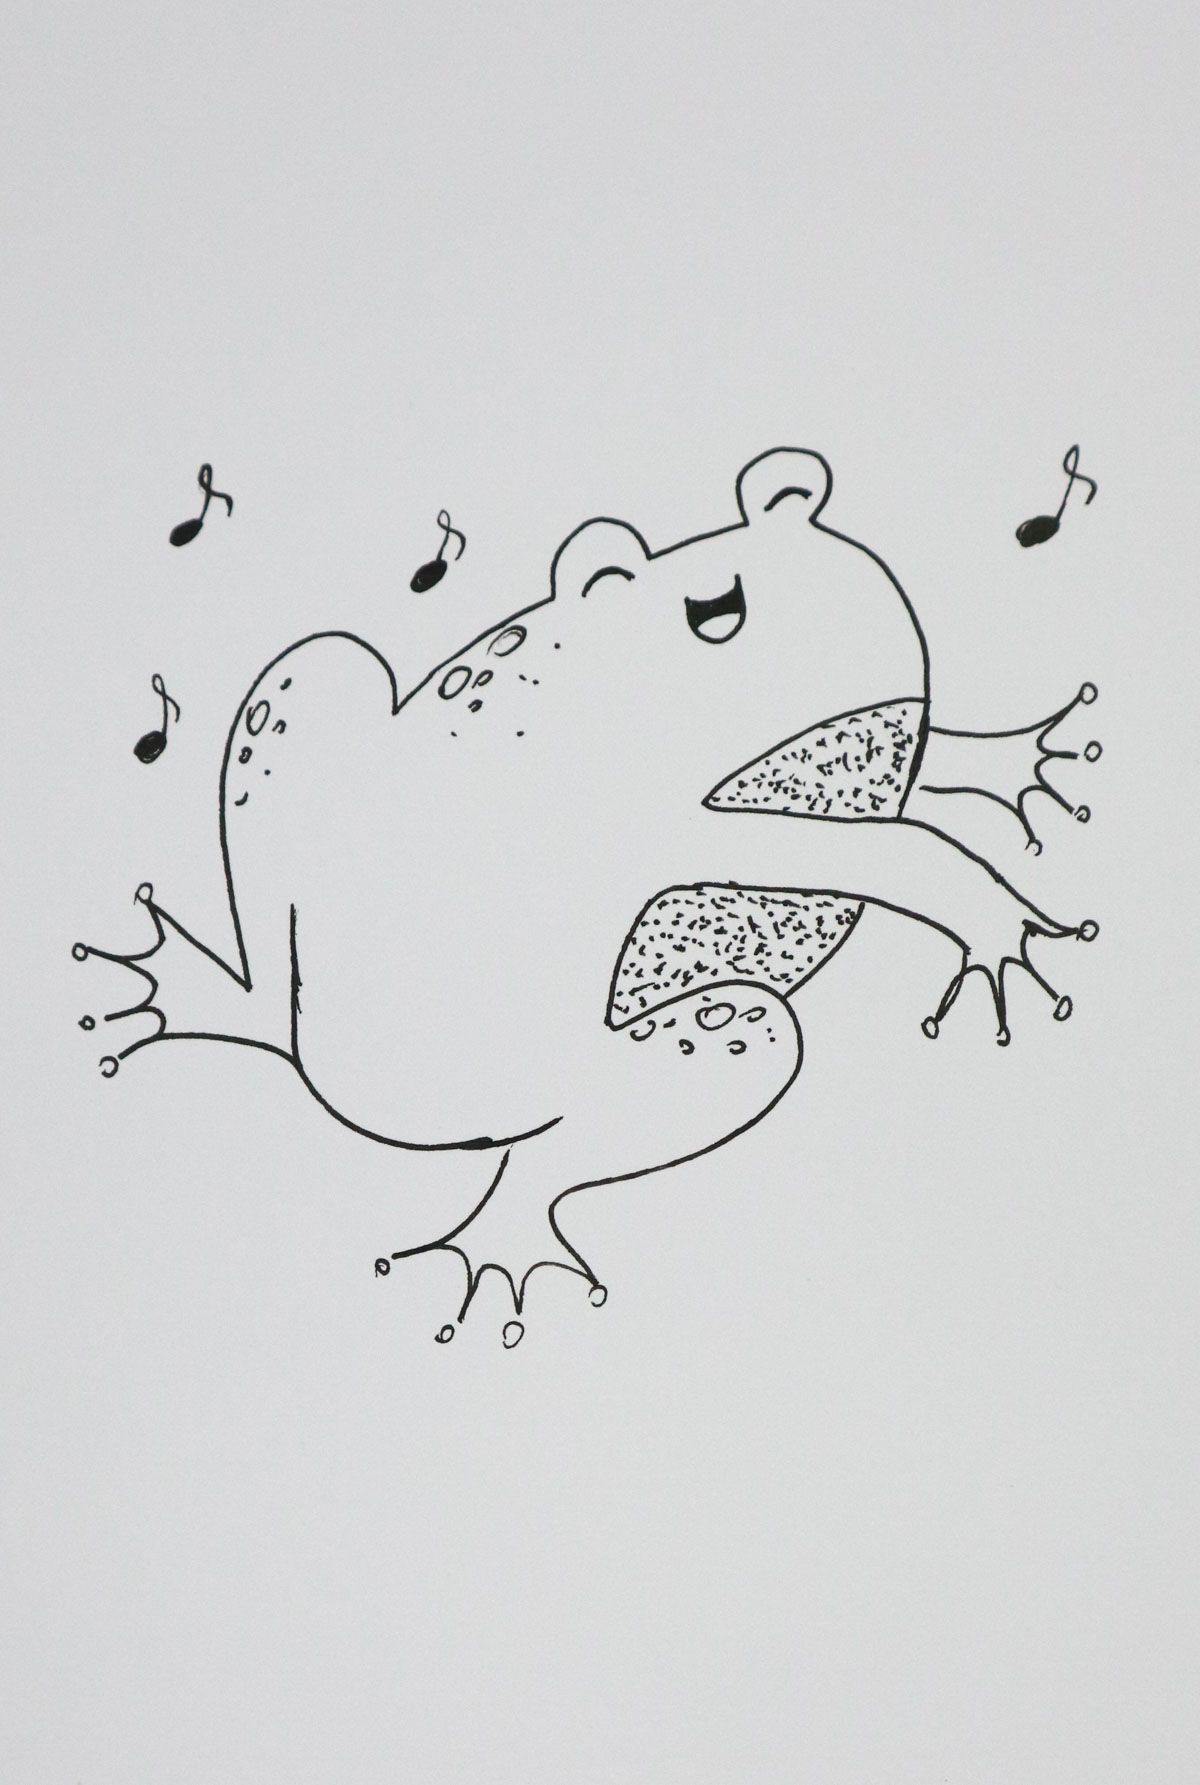 dancing frog drawing